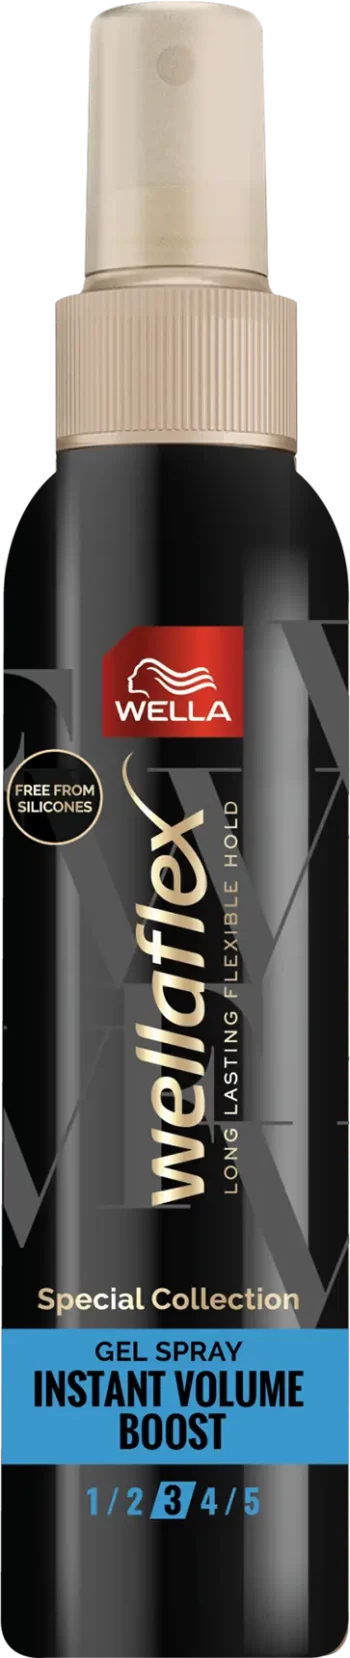 wella wellaflex instant volume boost styling gel spray 150ml